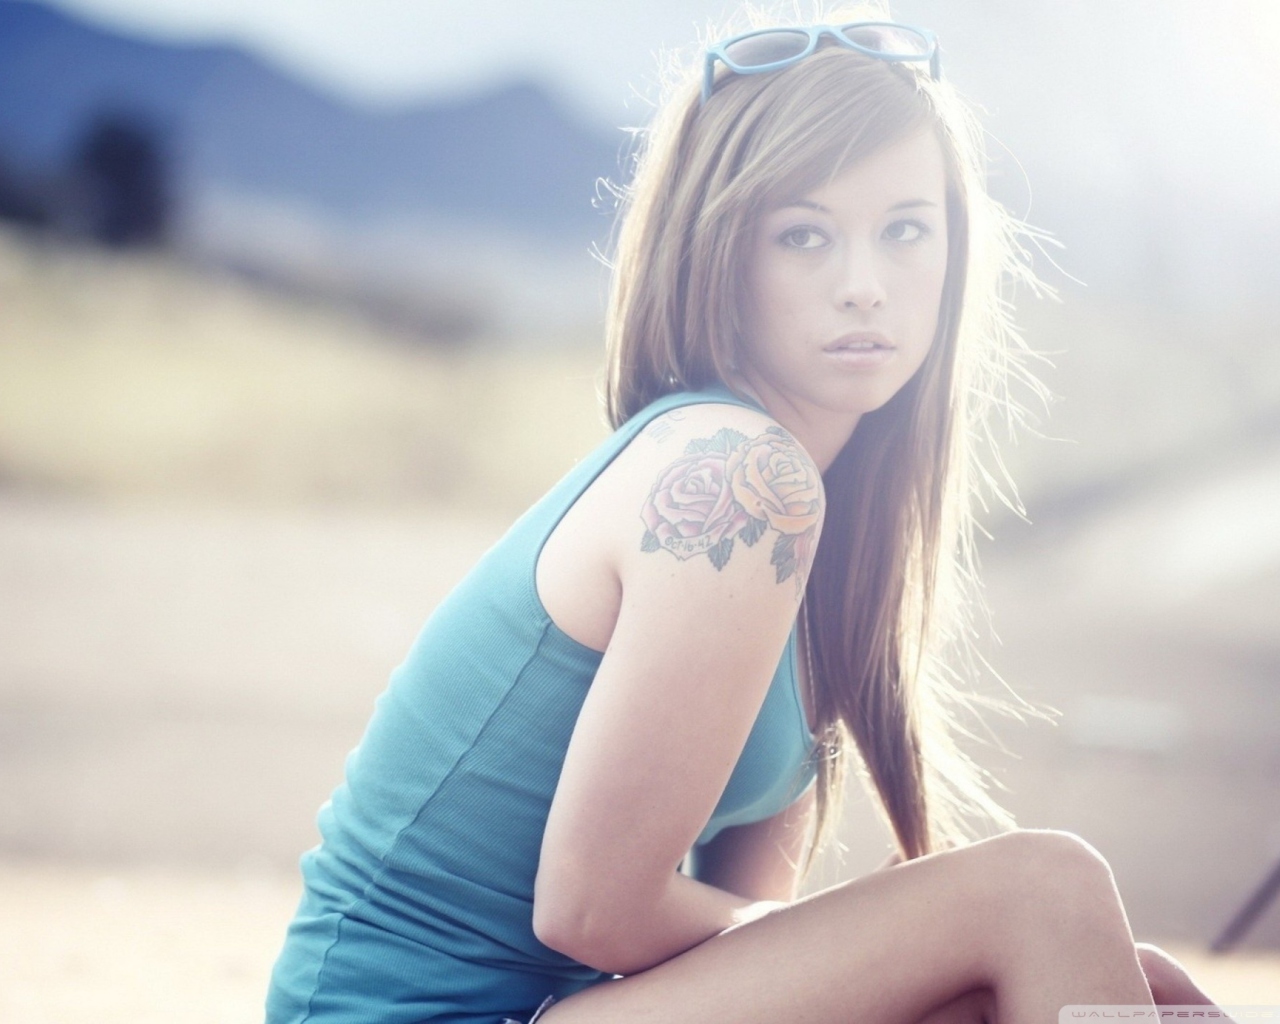 Beautiful Girl With Long Blonde Hair And Rose Tattoo screenshot #1 1280x1024